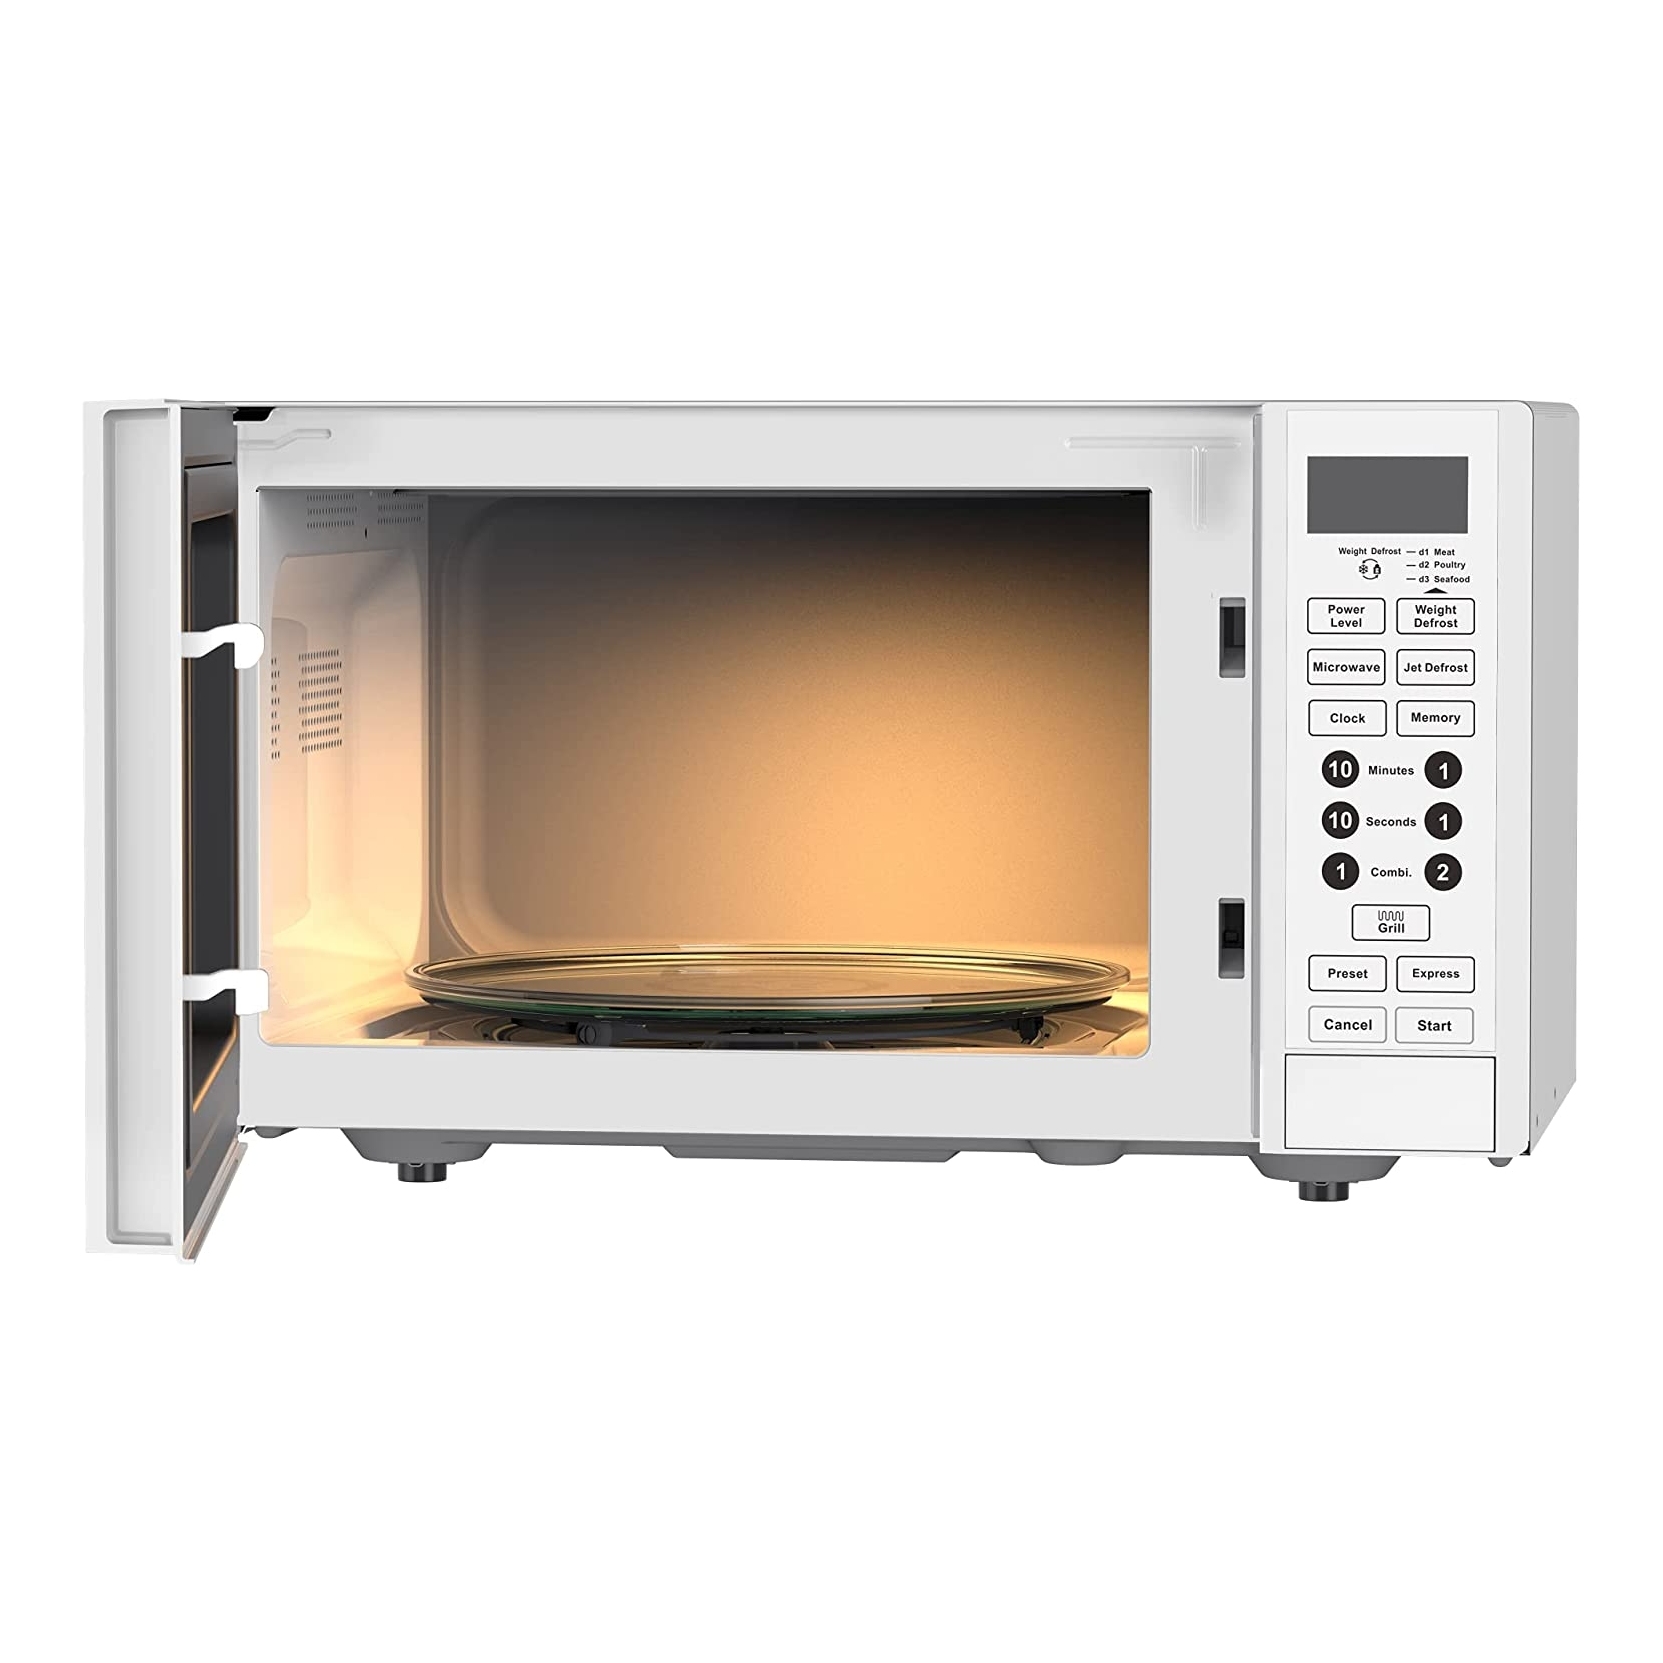 Beko forno a Microonde MGF23330S, 23 L, Digitale, Funzione Grill, Silver :  .it: Casa e cucina